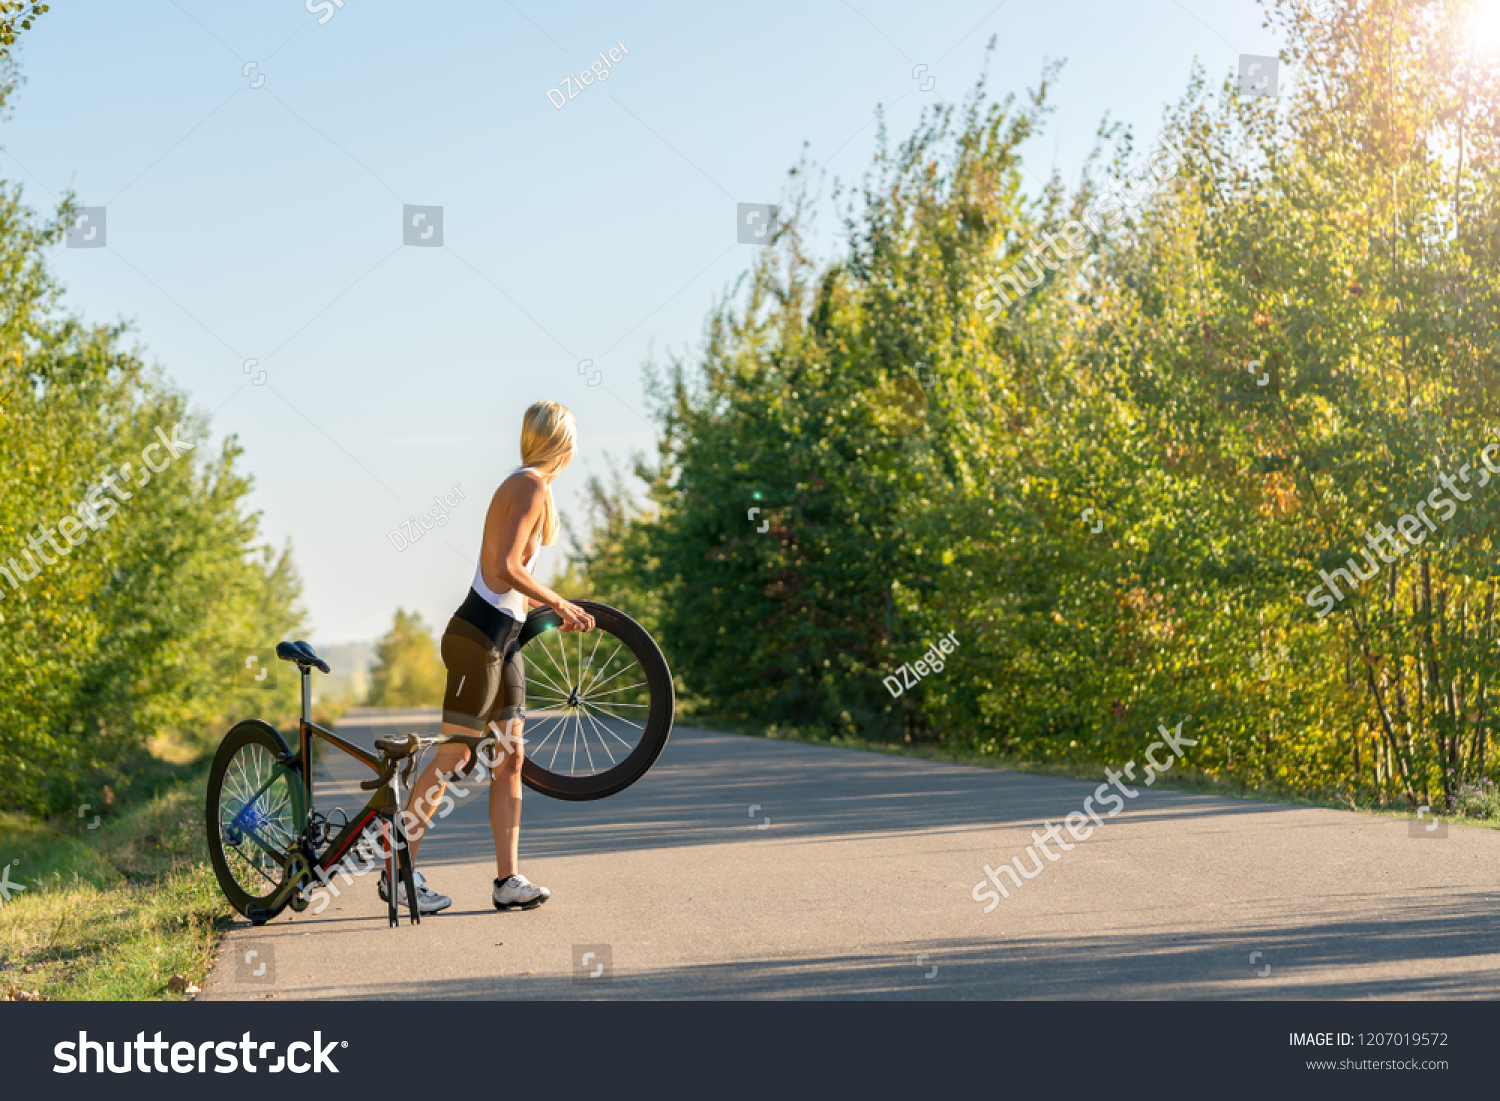 road bike flat tire